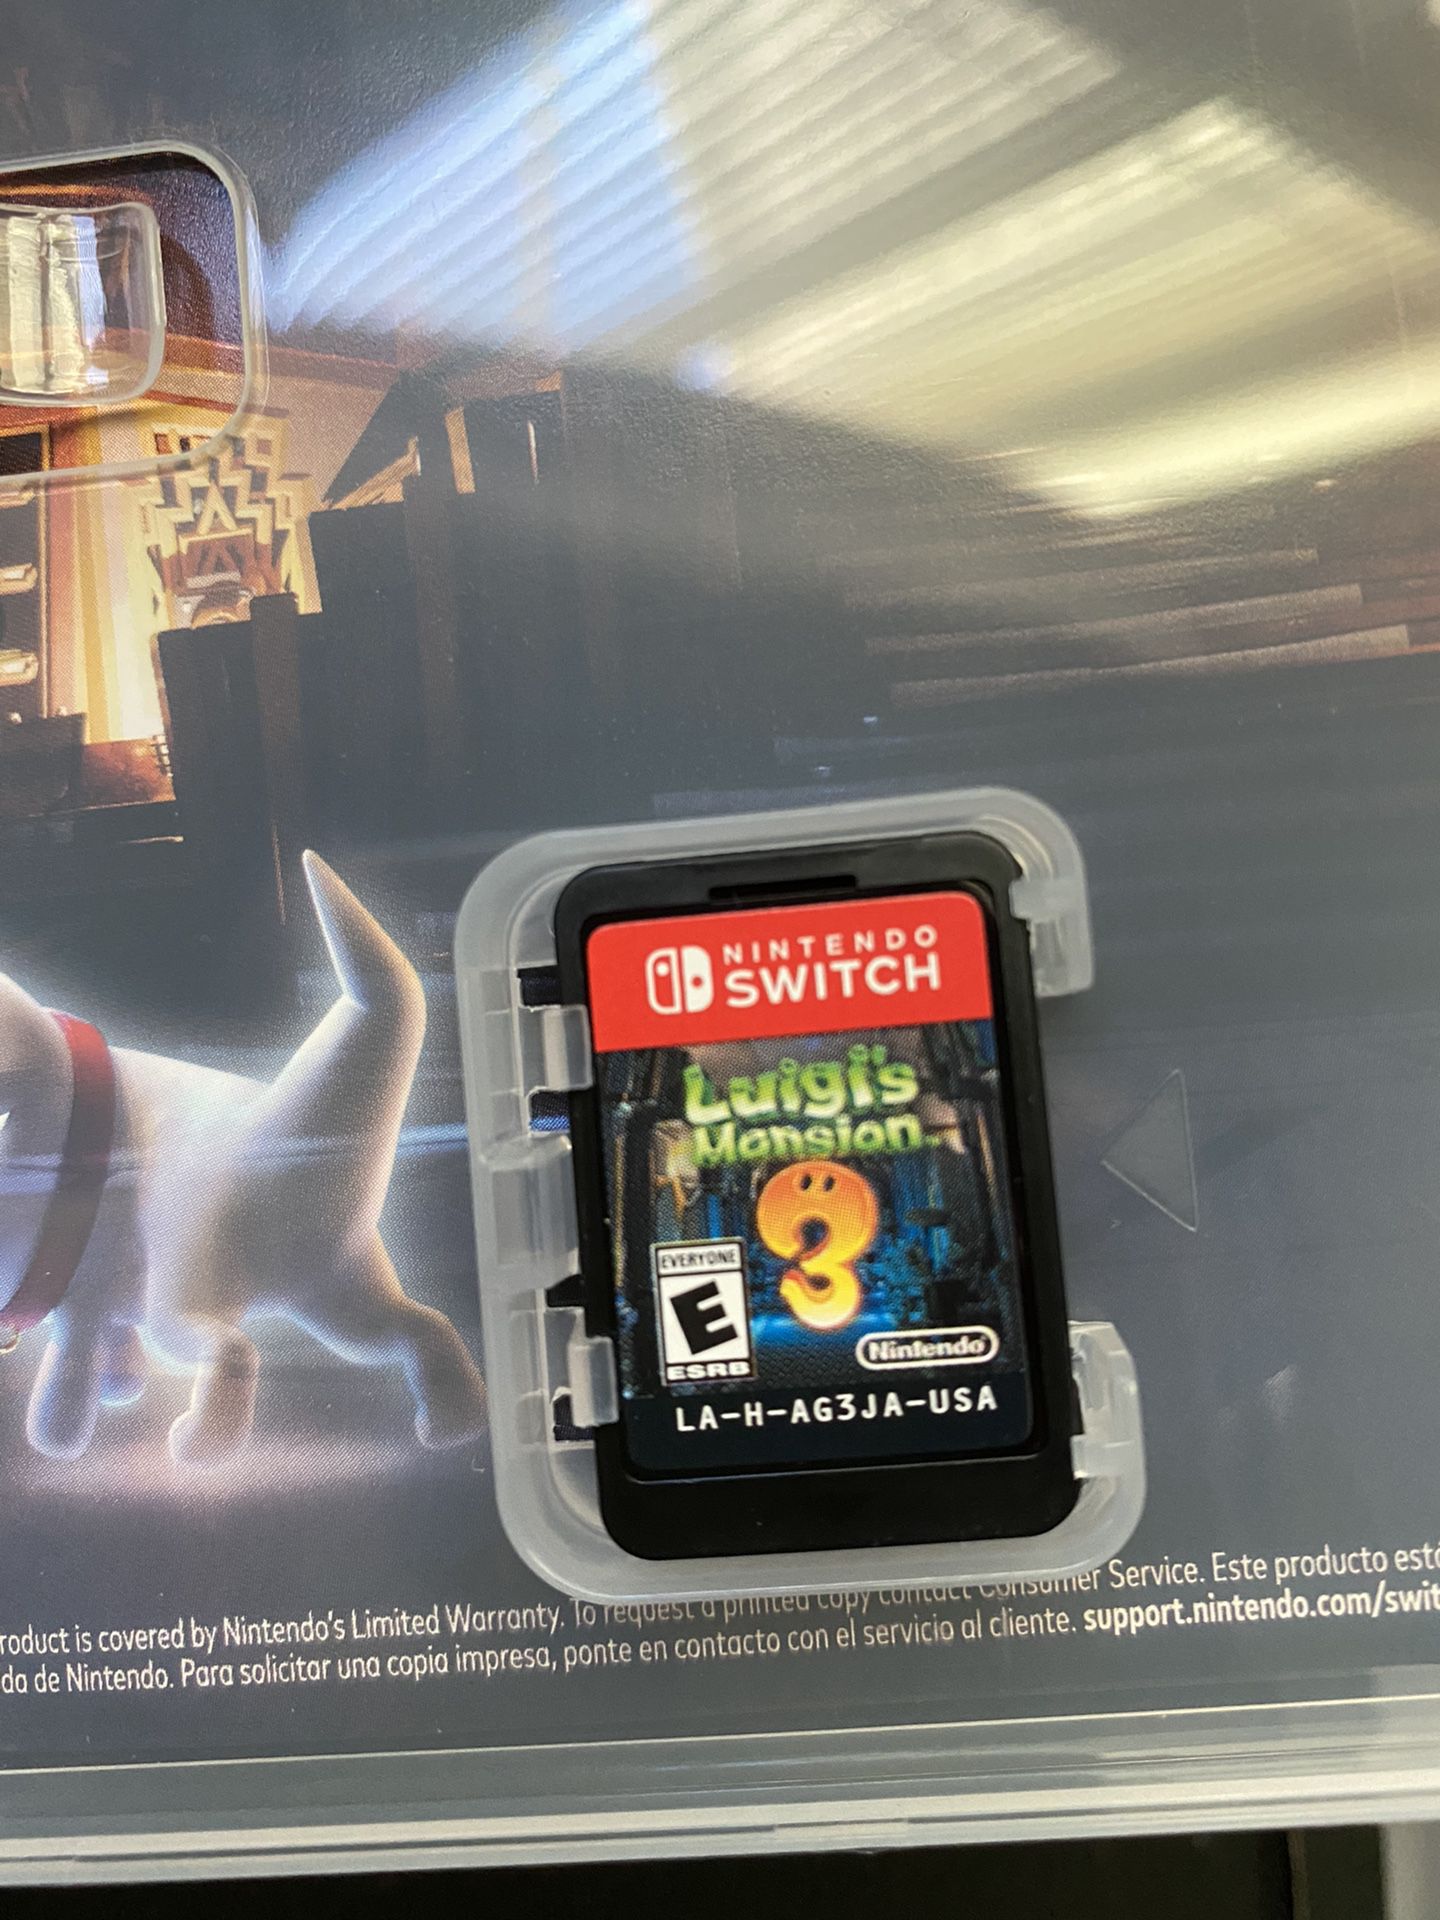 Luigi’s Mansion 3 [Nintendo Switch] Brand New!!